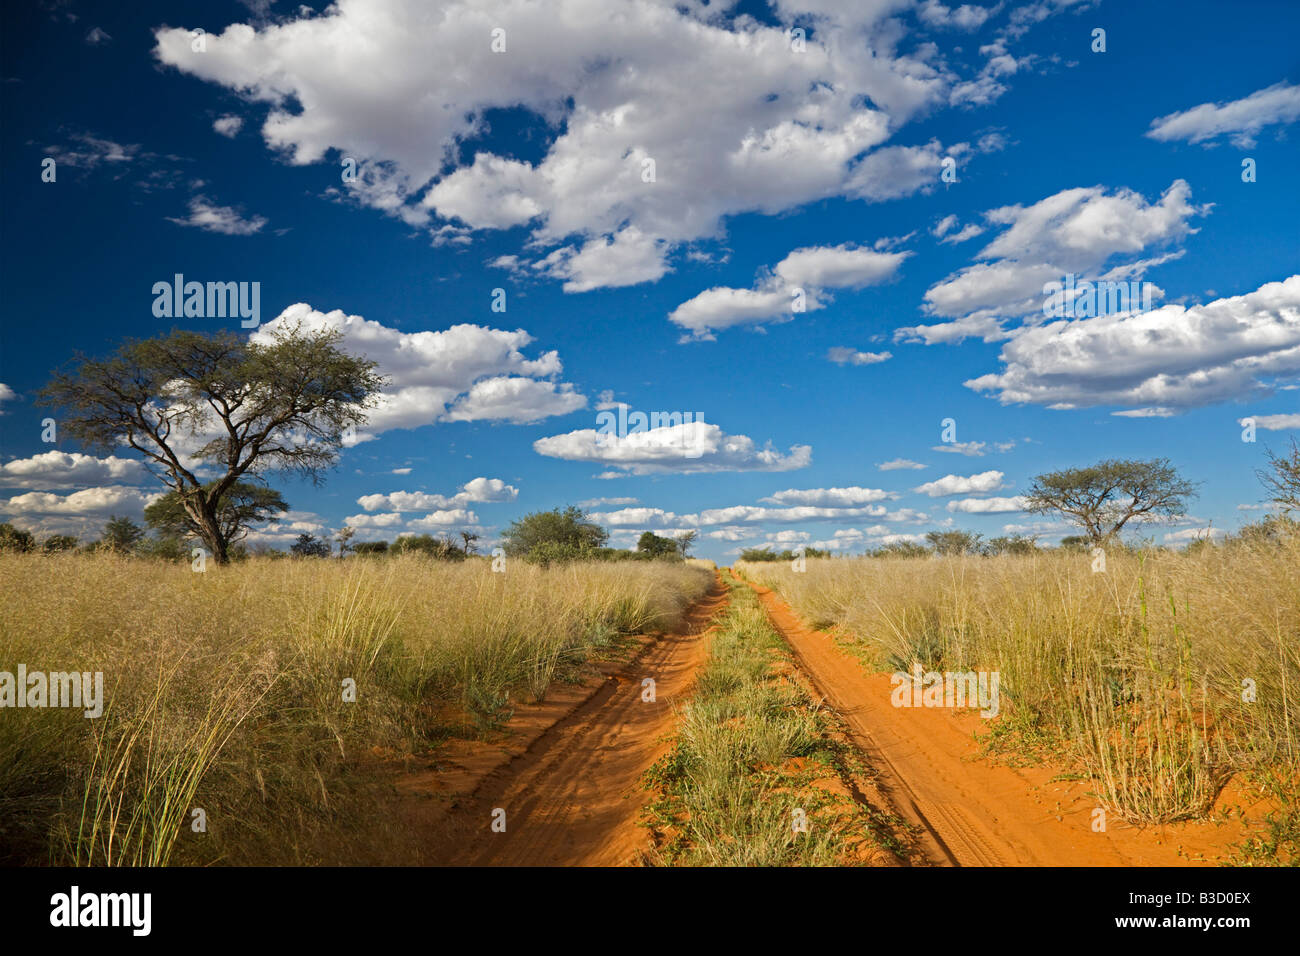 Africa, Botswana,via attraverso il deserto Kalahari Foto Stock